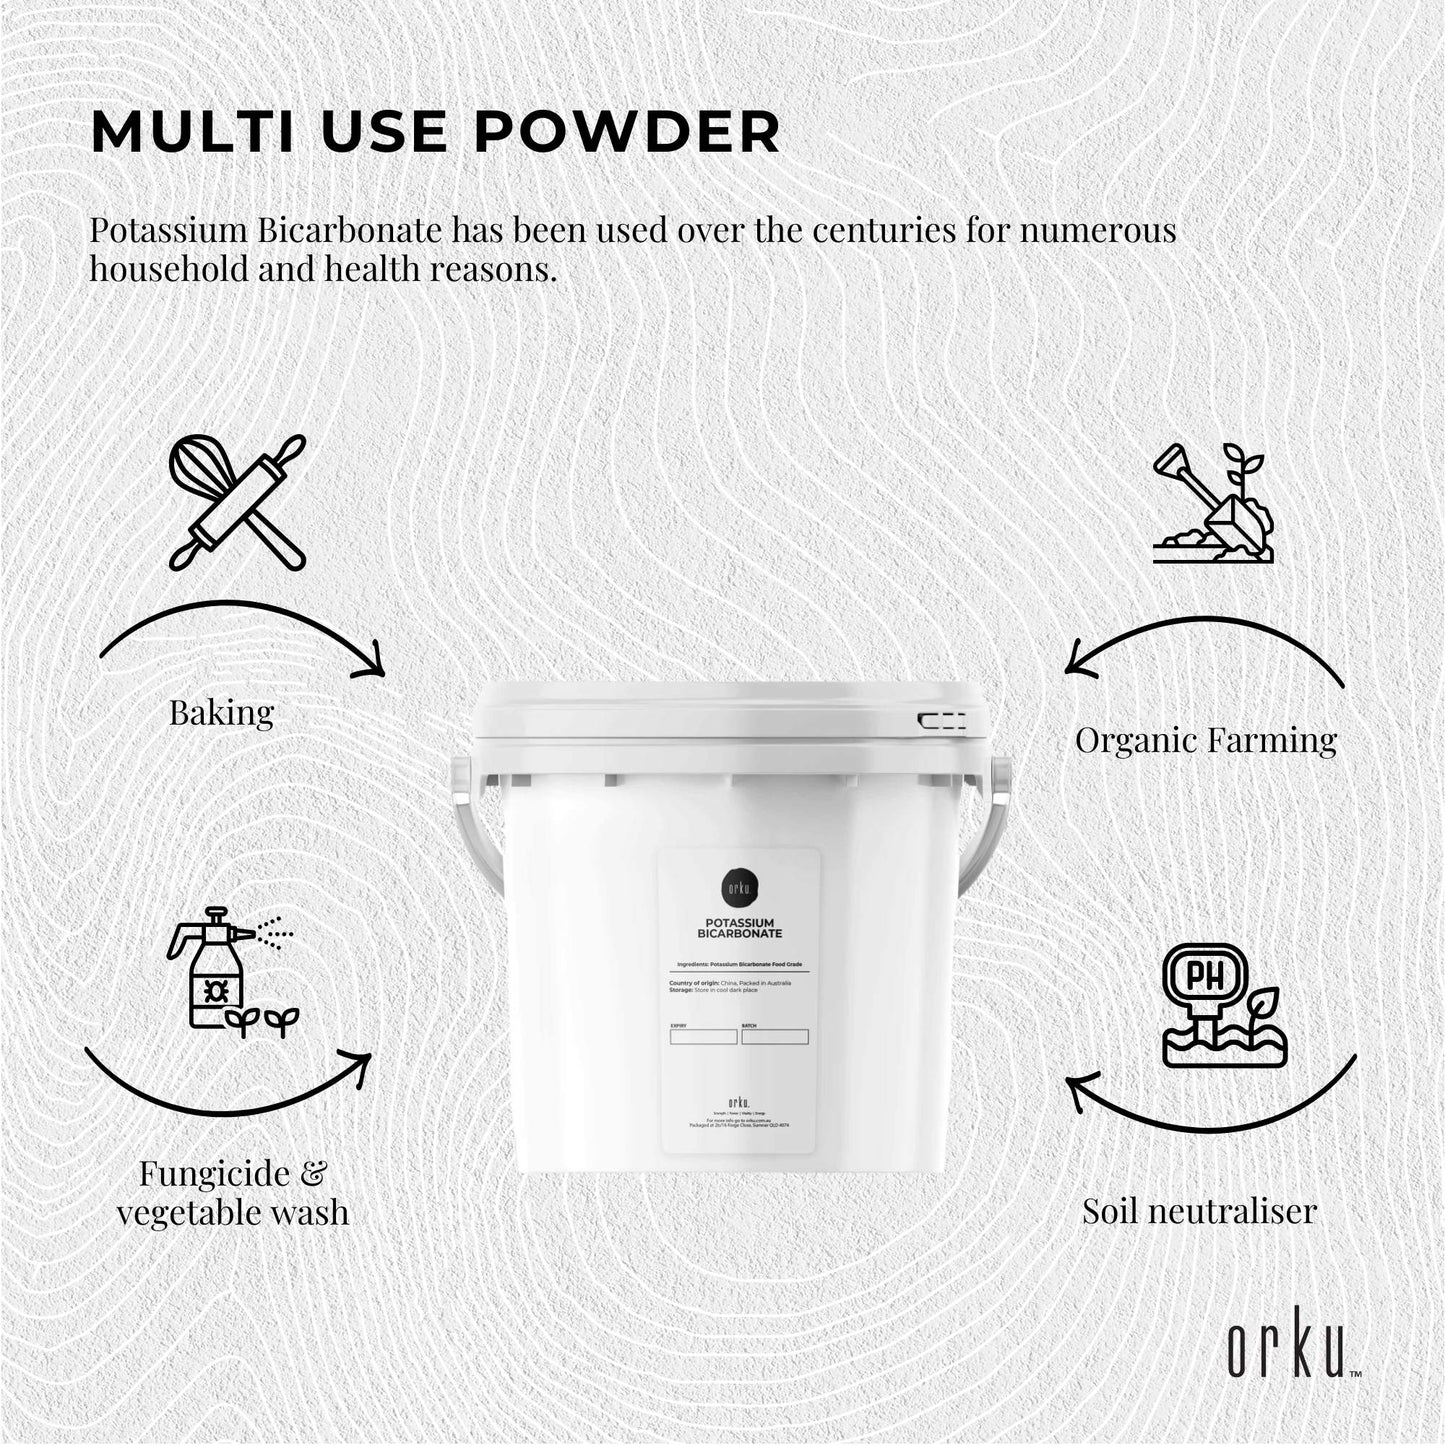 5Kg Organic Potassium Bicarbonate Powder Tub - Food Grade FCC for Brewing Baking